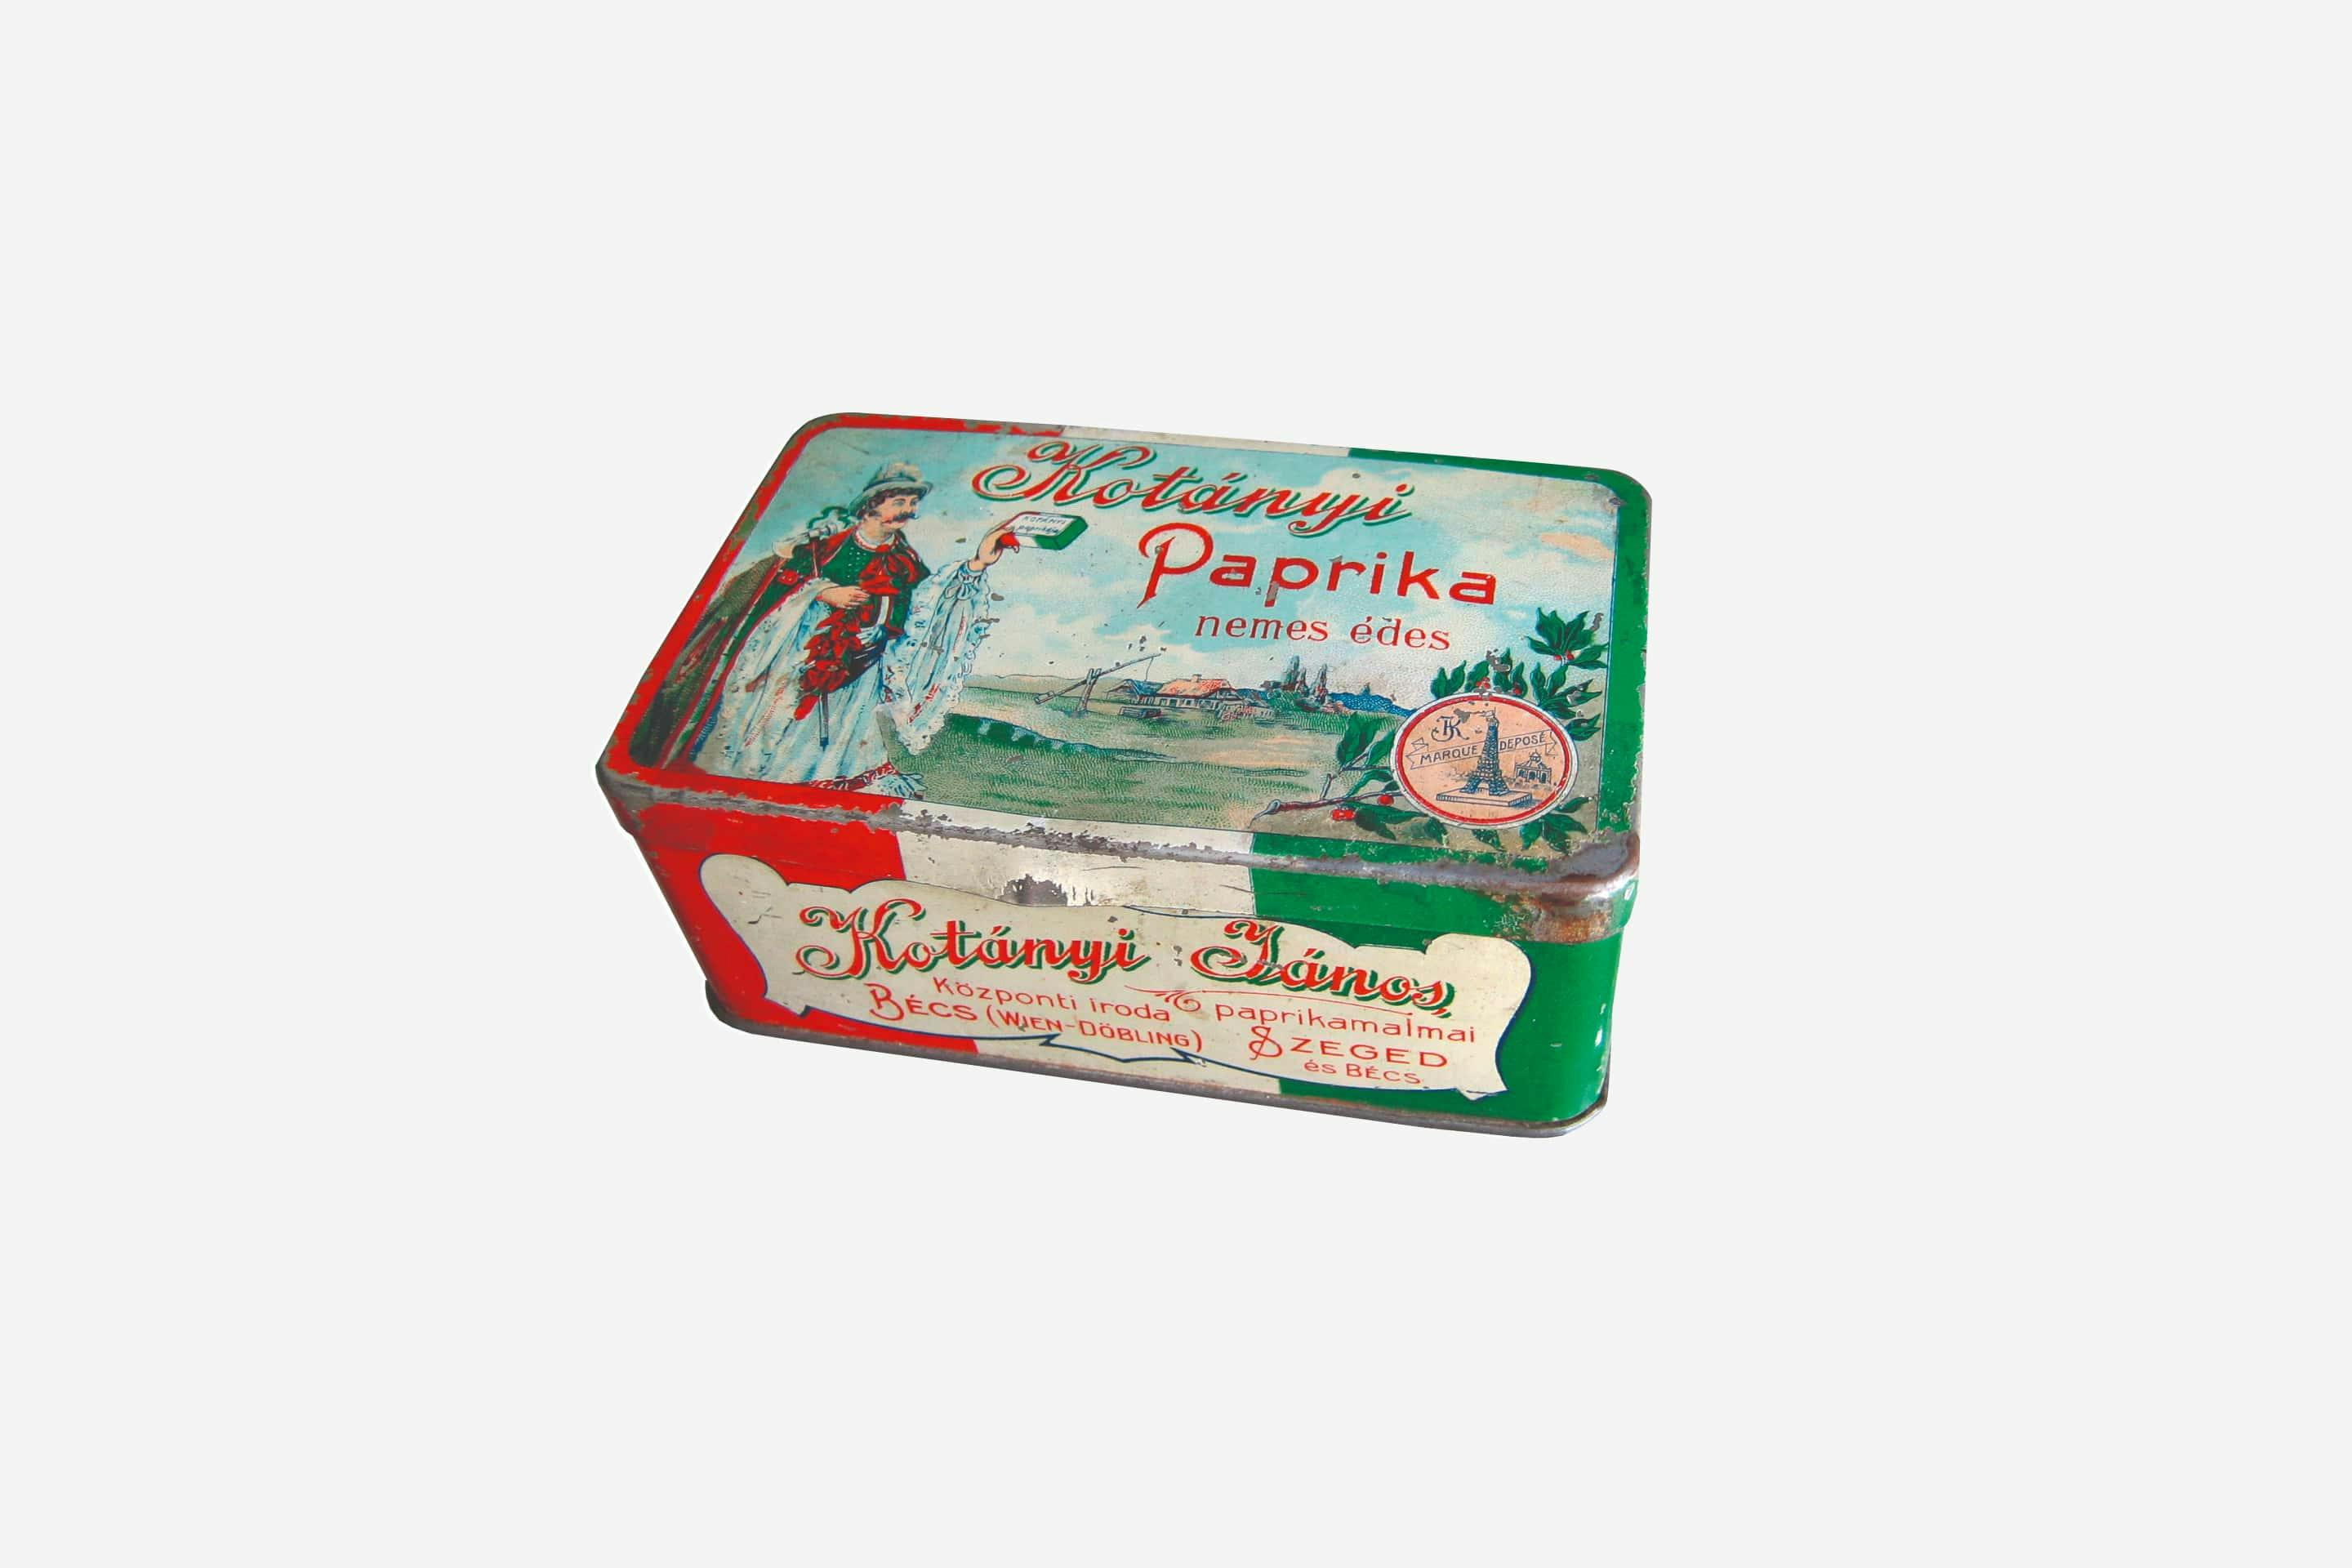 Kotányi ground paprika packaging from 1900.